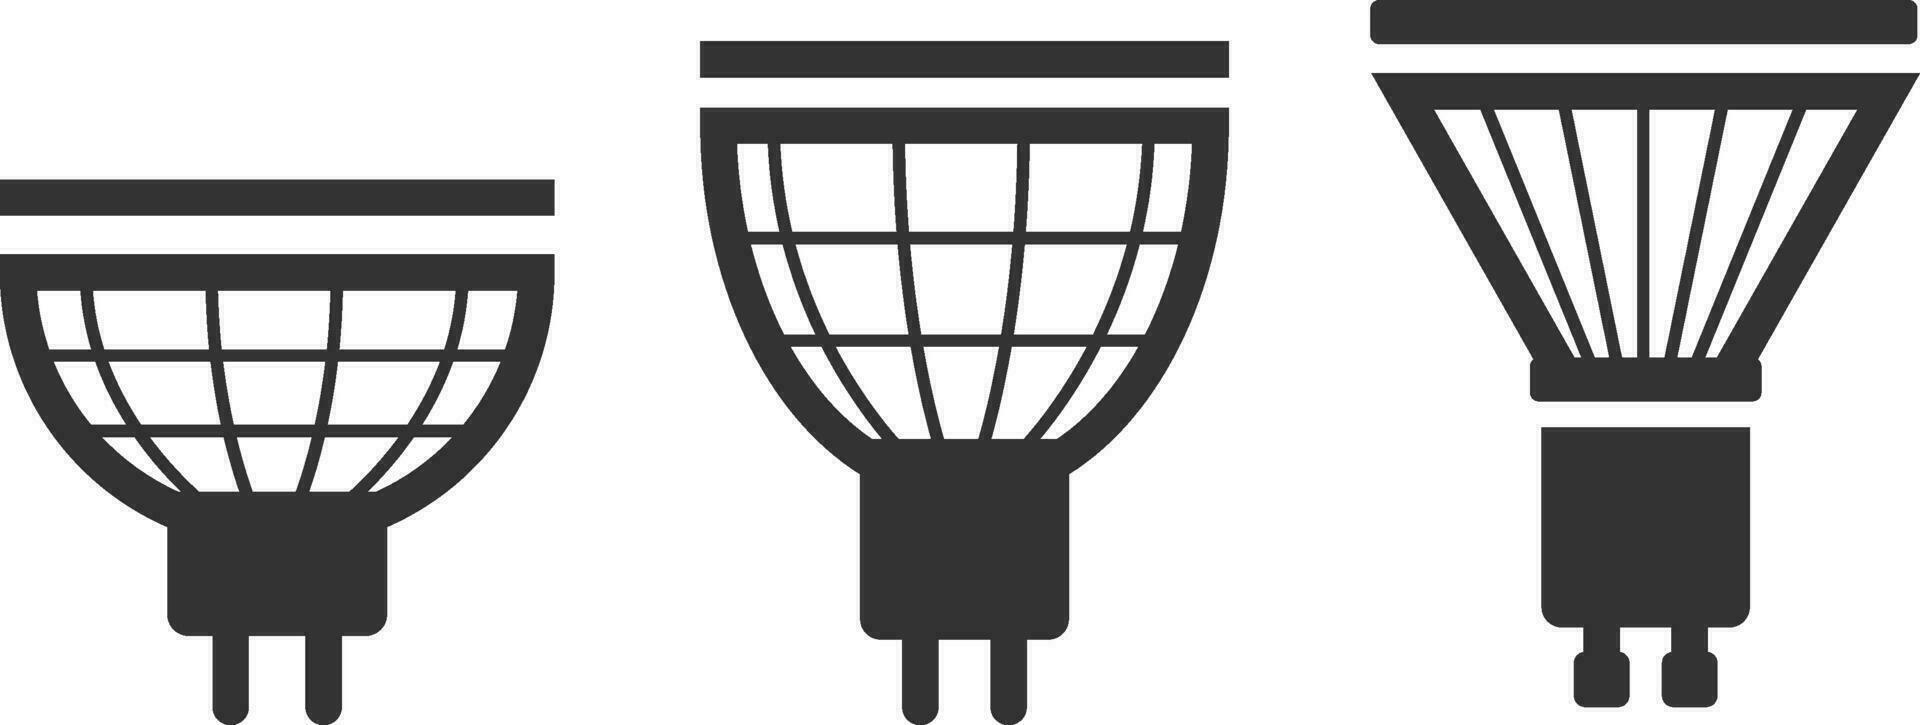 vector de icono de bombilla. concepto de logotipo de idea de bombilla. establecer lámparas electricidad iconos elemento de diseño web. silueta aislada de luces led.